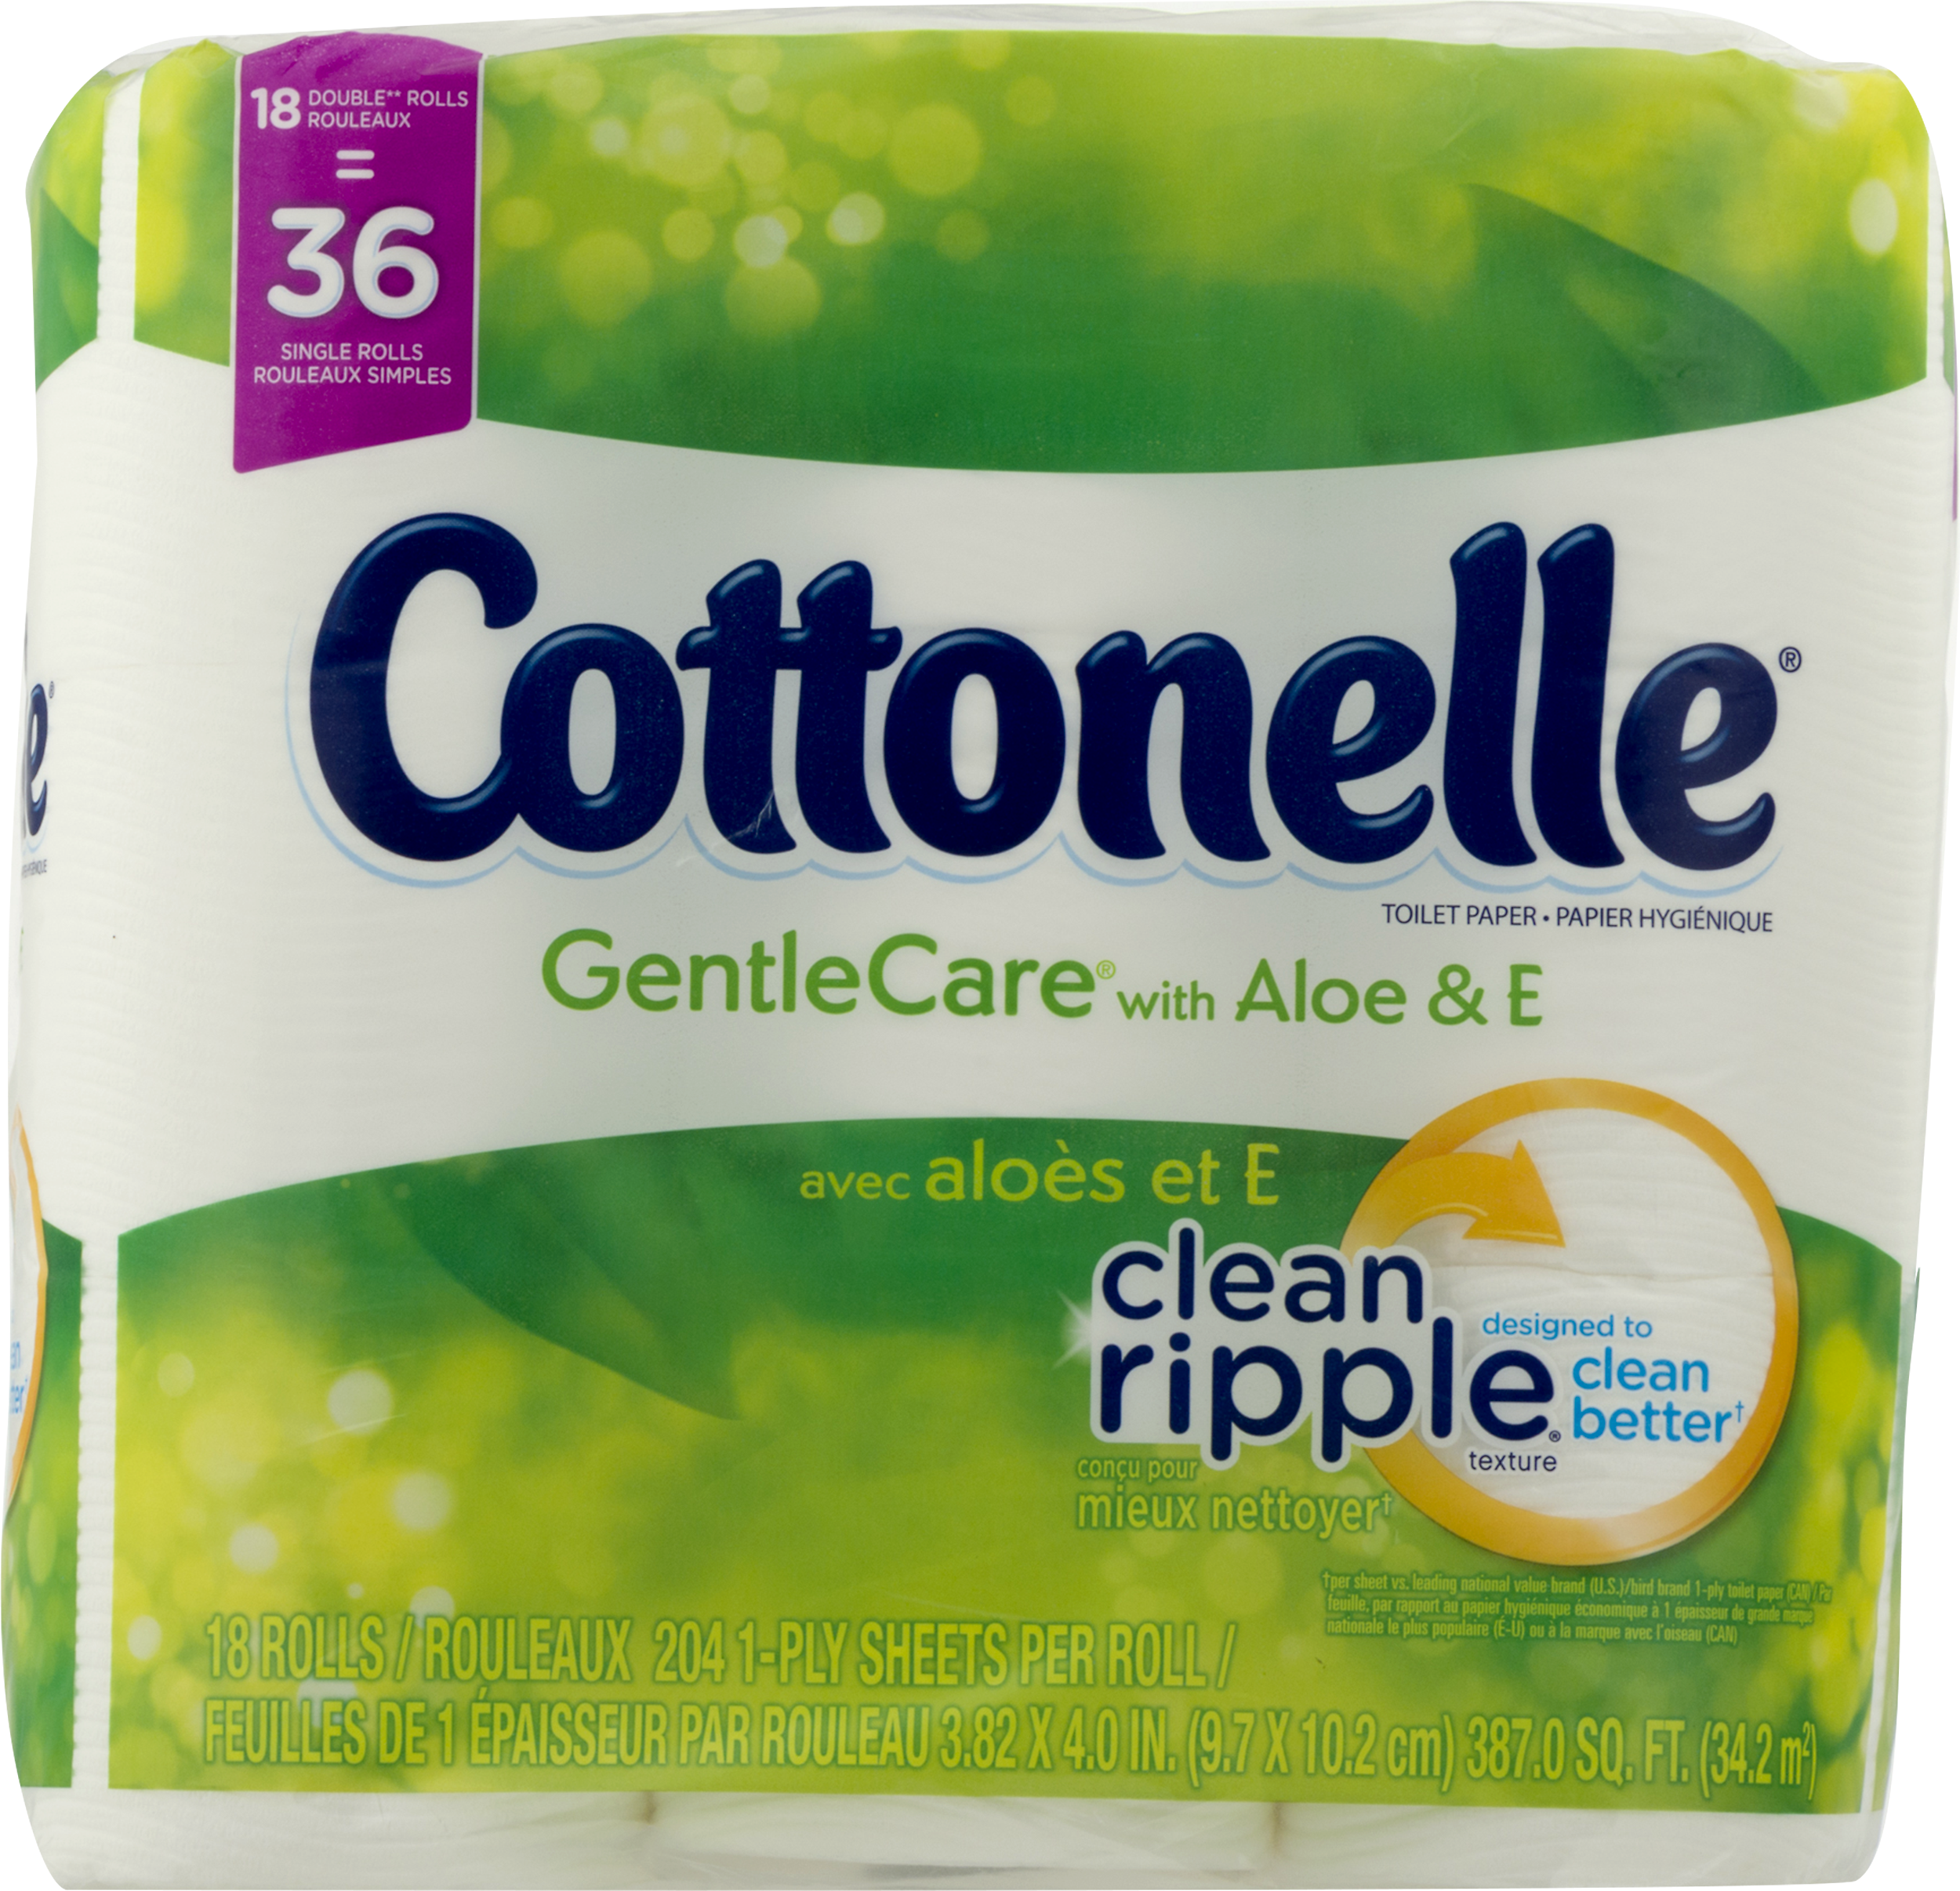 Cottonelle Gentle Care Toilet Paper, 18 Double Rolls - image 3 of 5